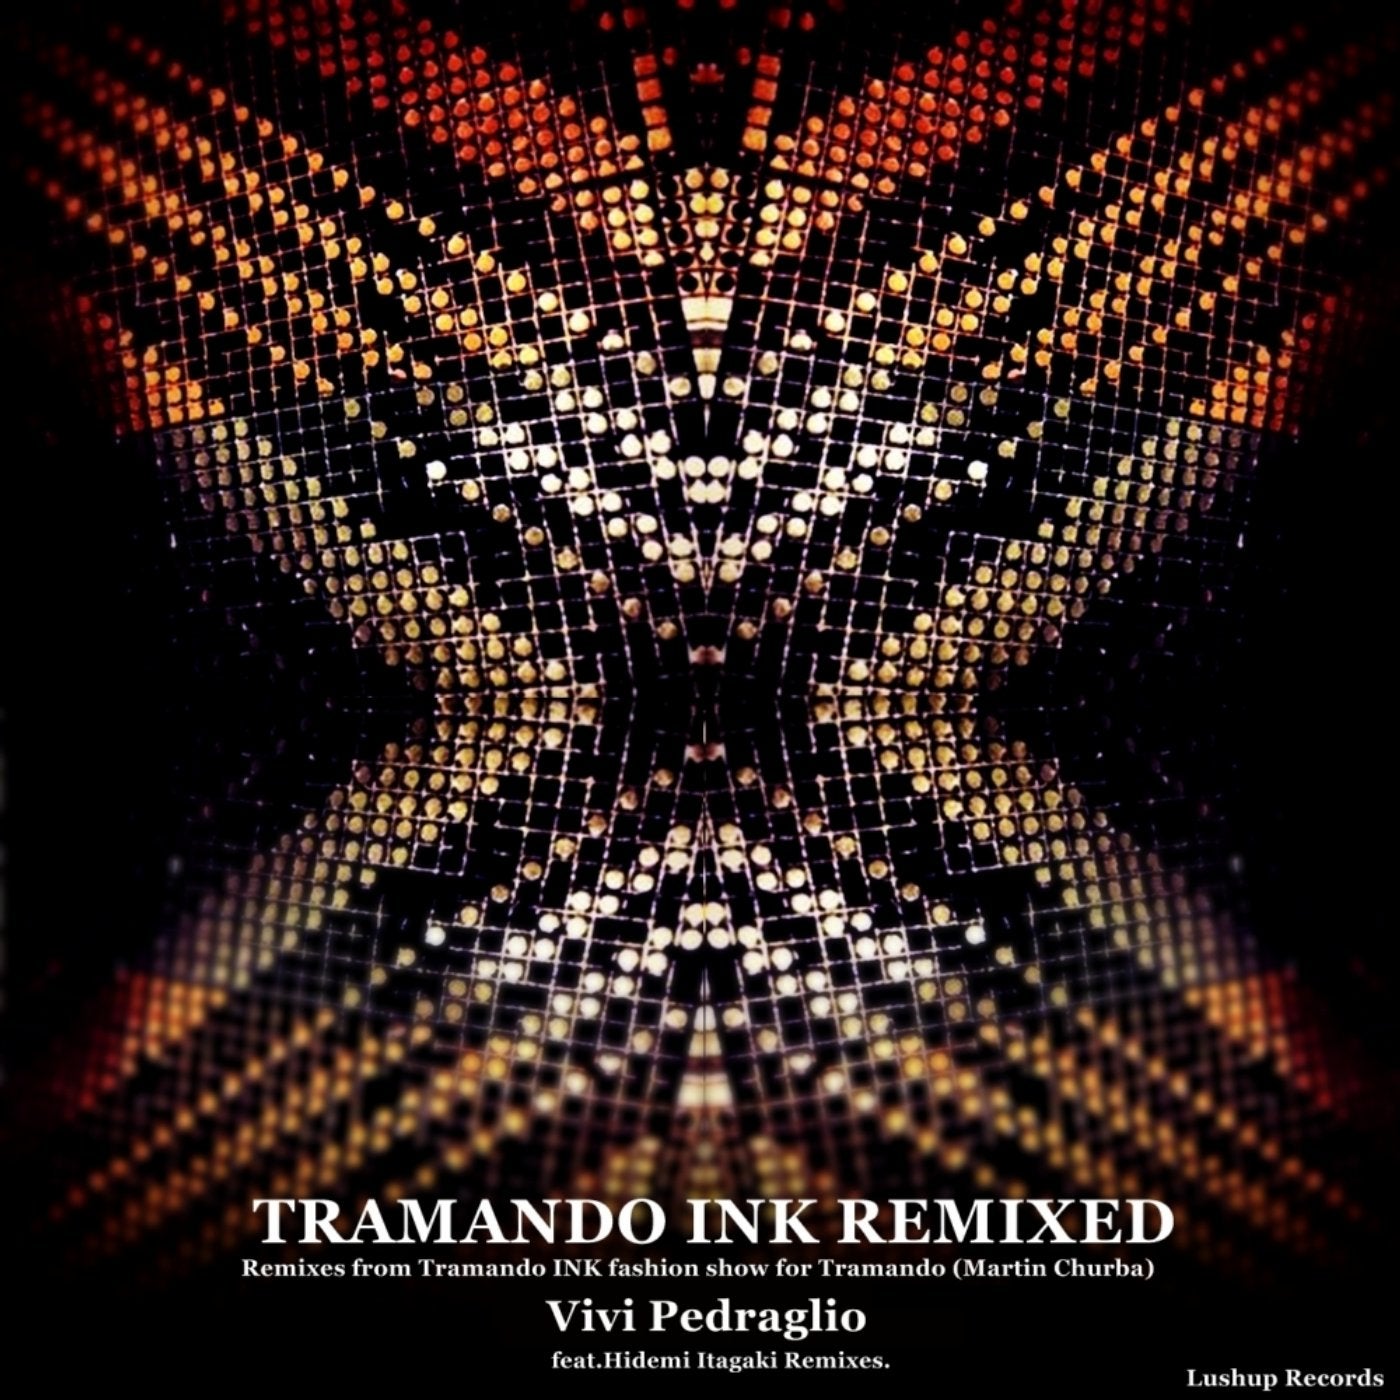 Tramando Ink Remixed